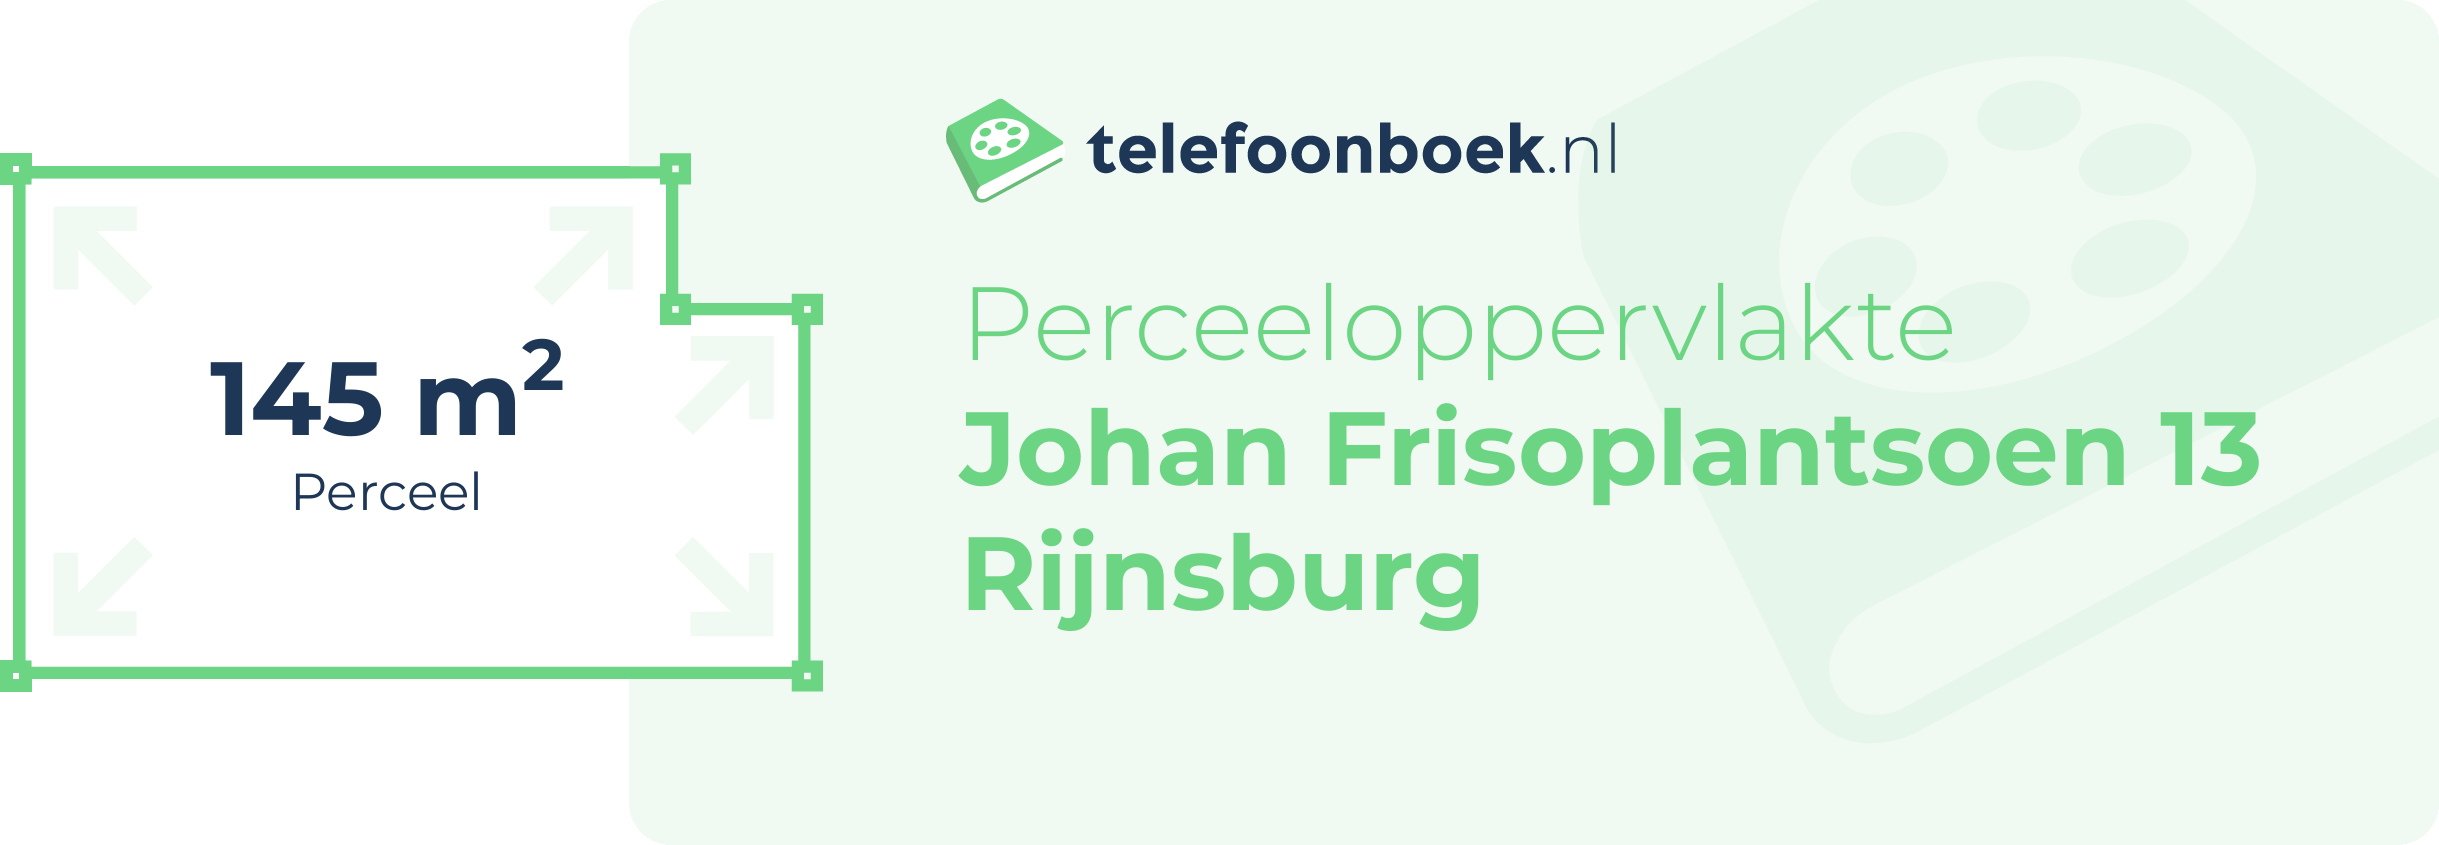 Perceeloppervlakte Johan Frisoplantsoen 13 Rijnsburg